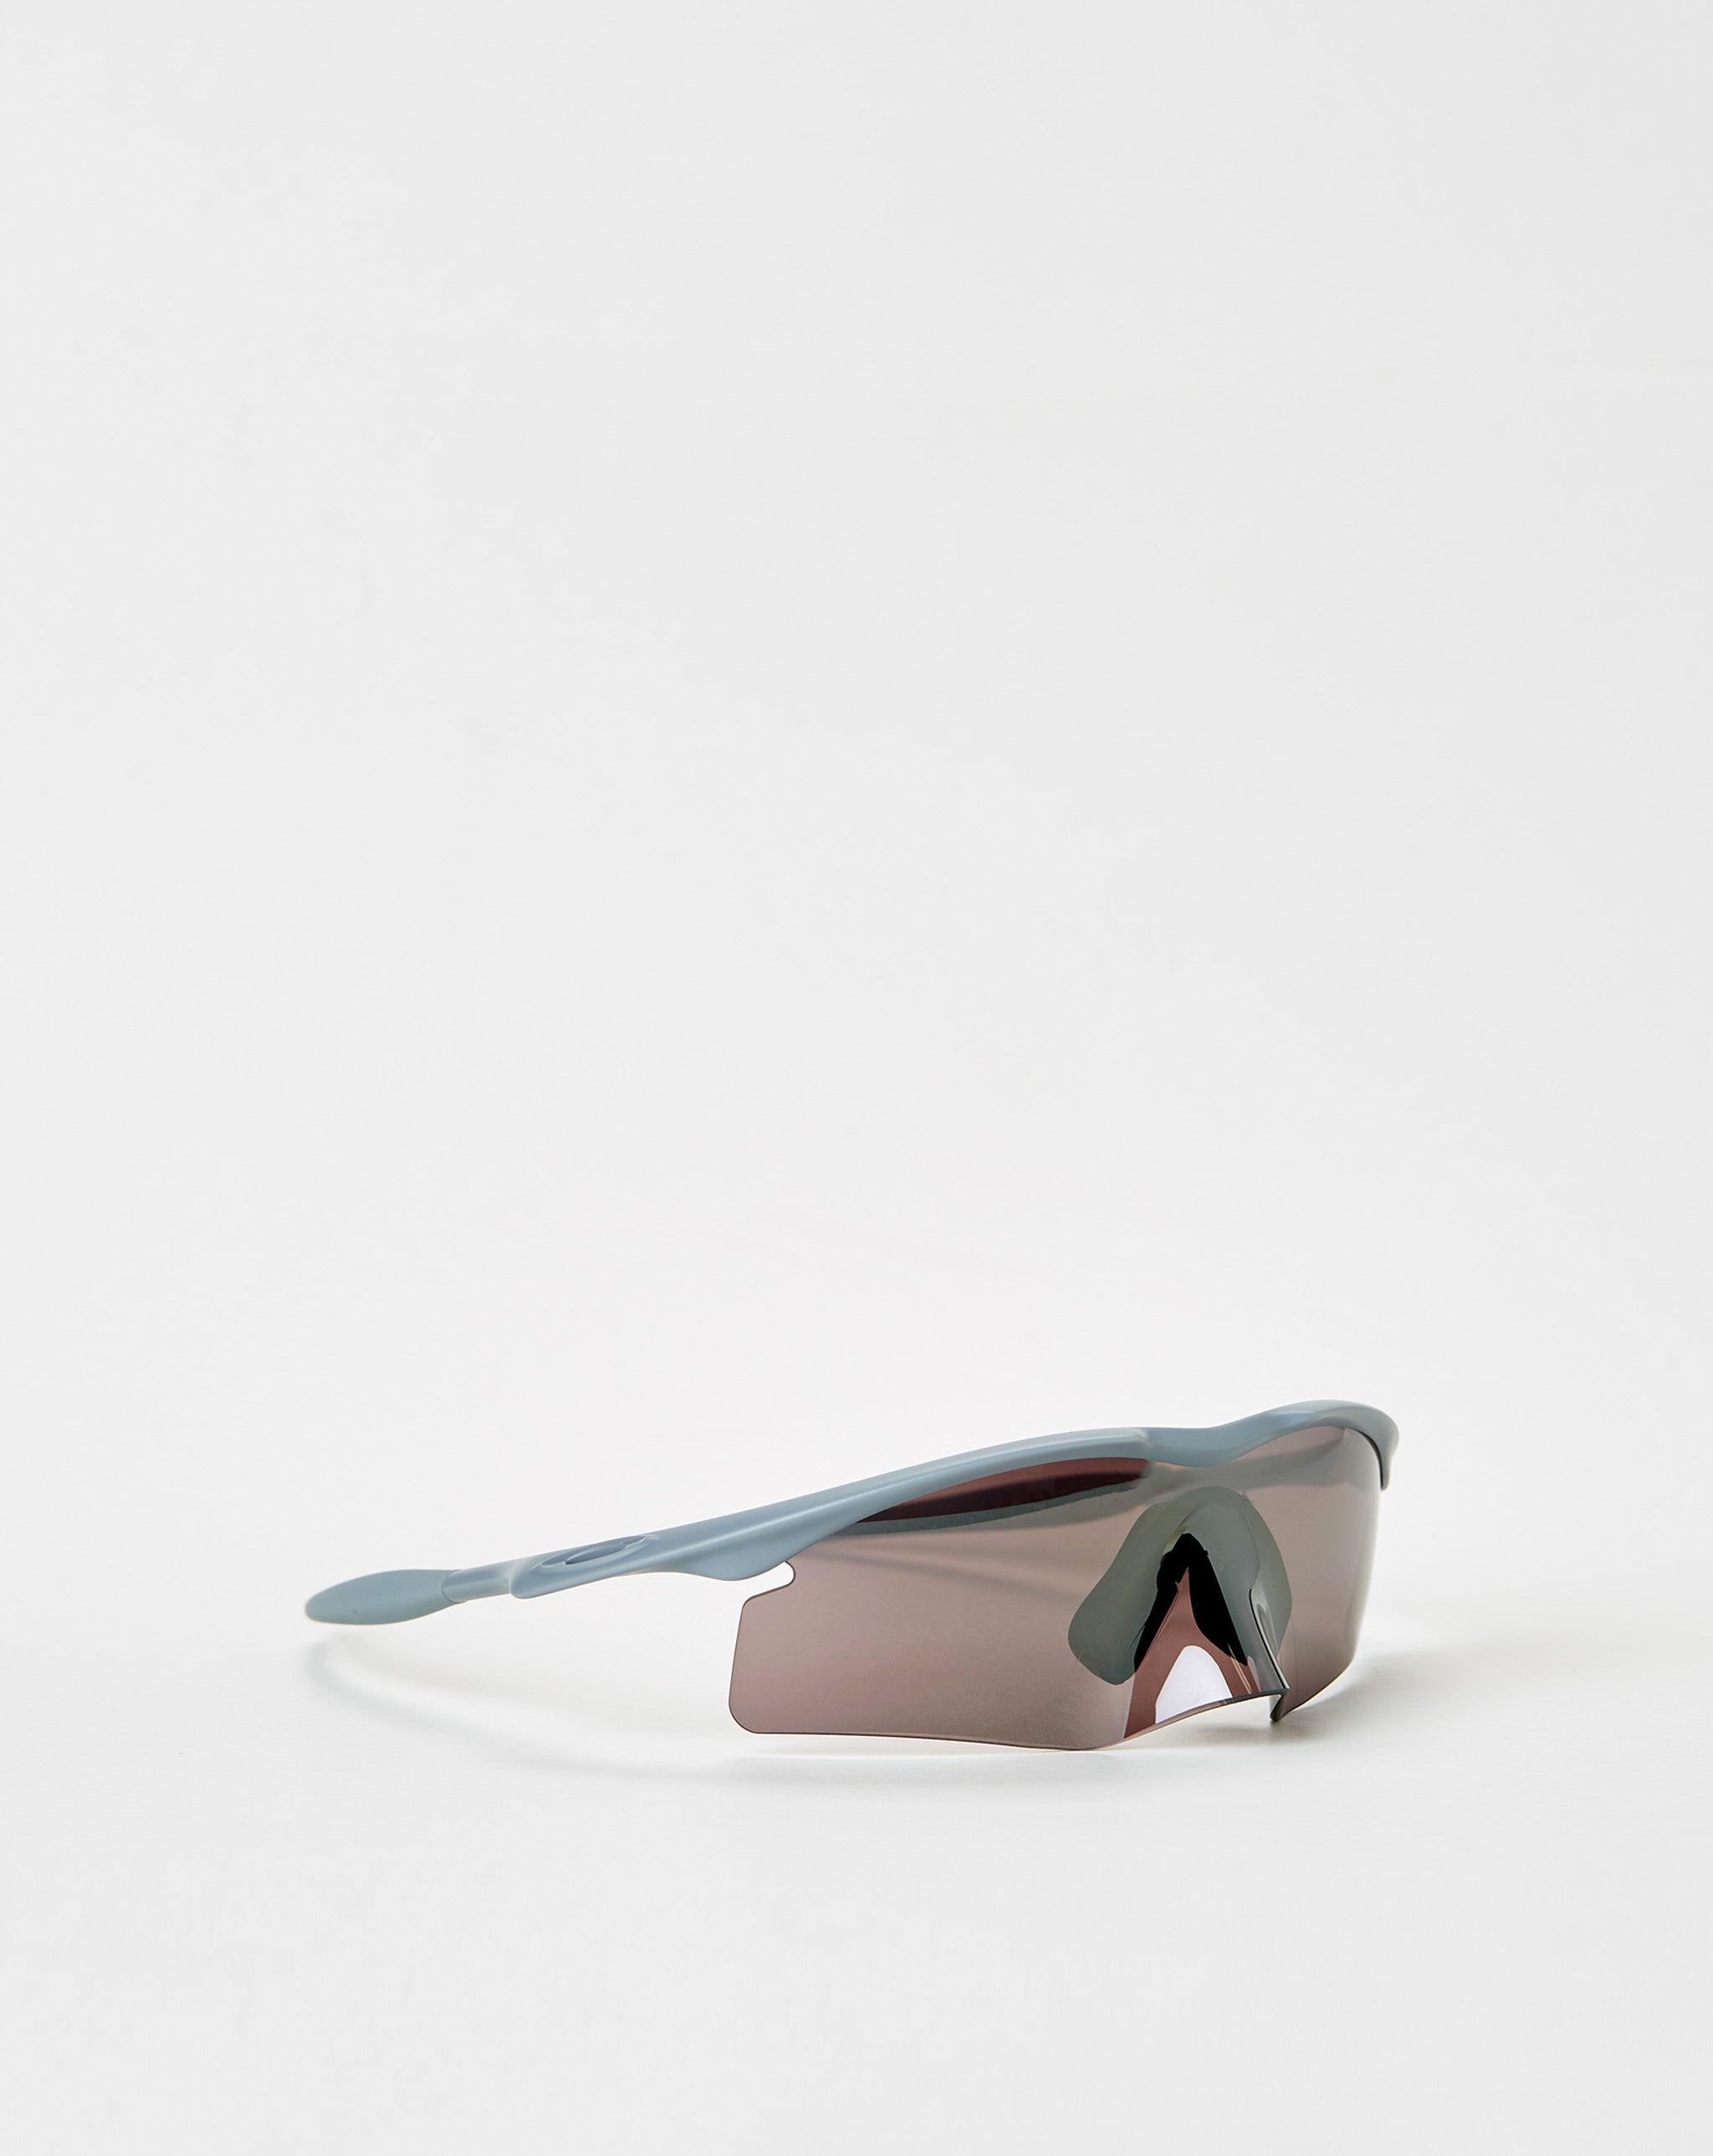 oakley sutro sunglasses matte black frames with prizm lens. Brand new | eBay